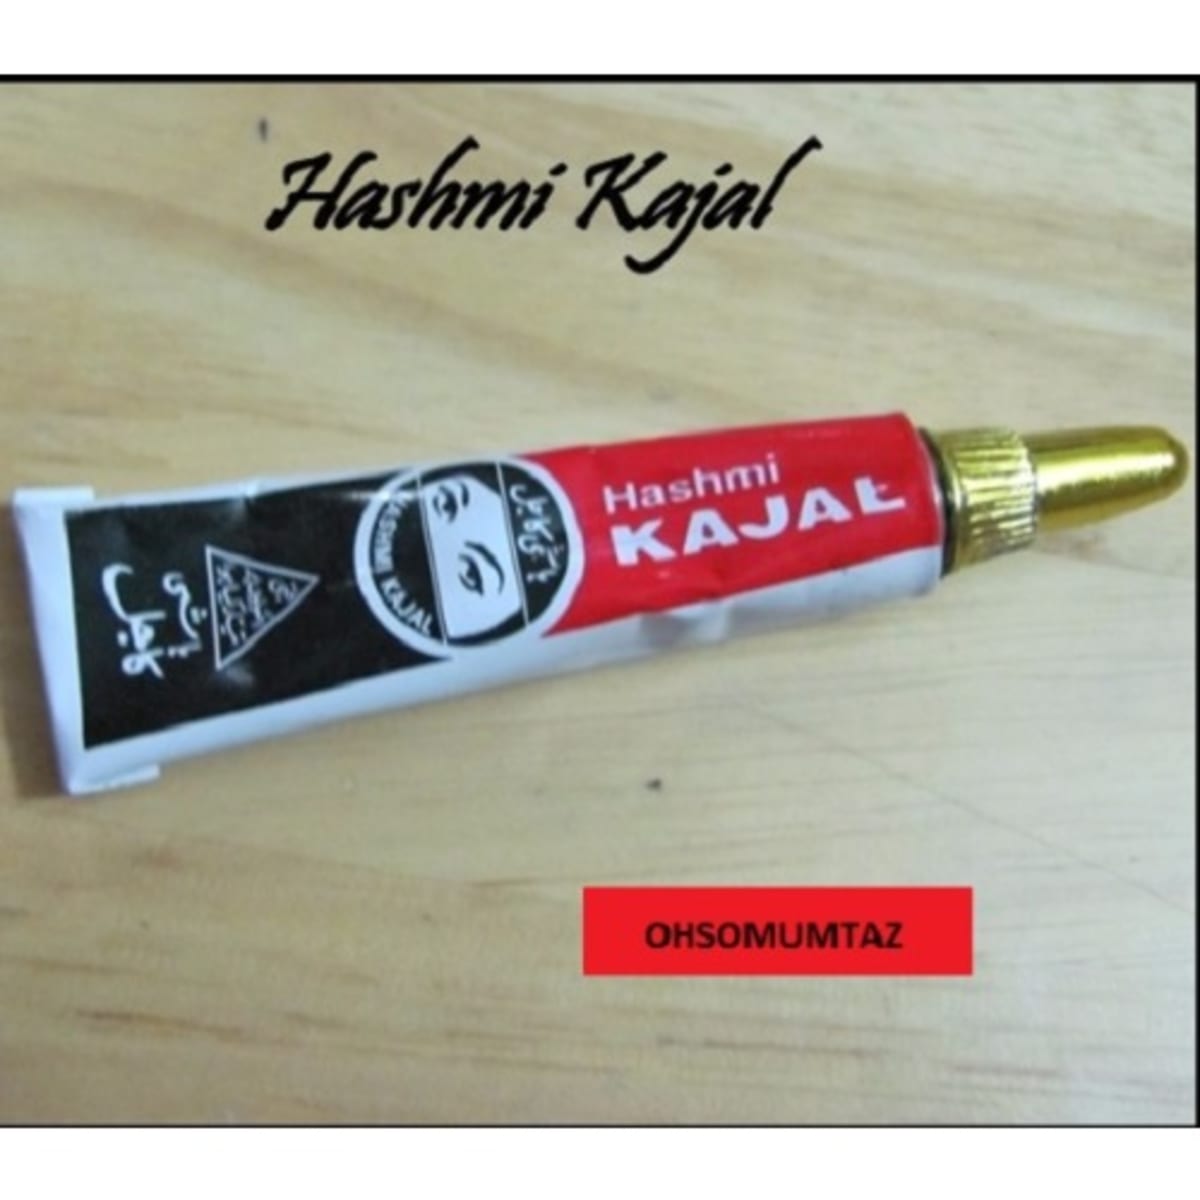 Kohl eye drops - khol Natural Eye Line - Hashmi - Tube - Black - Kujul -  Khol - Arab Home Decor